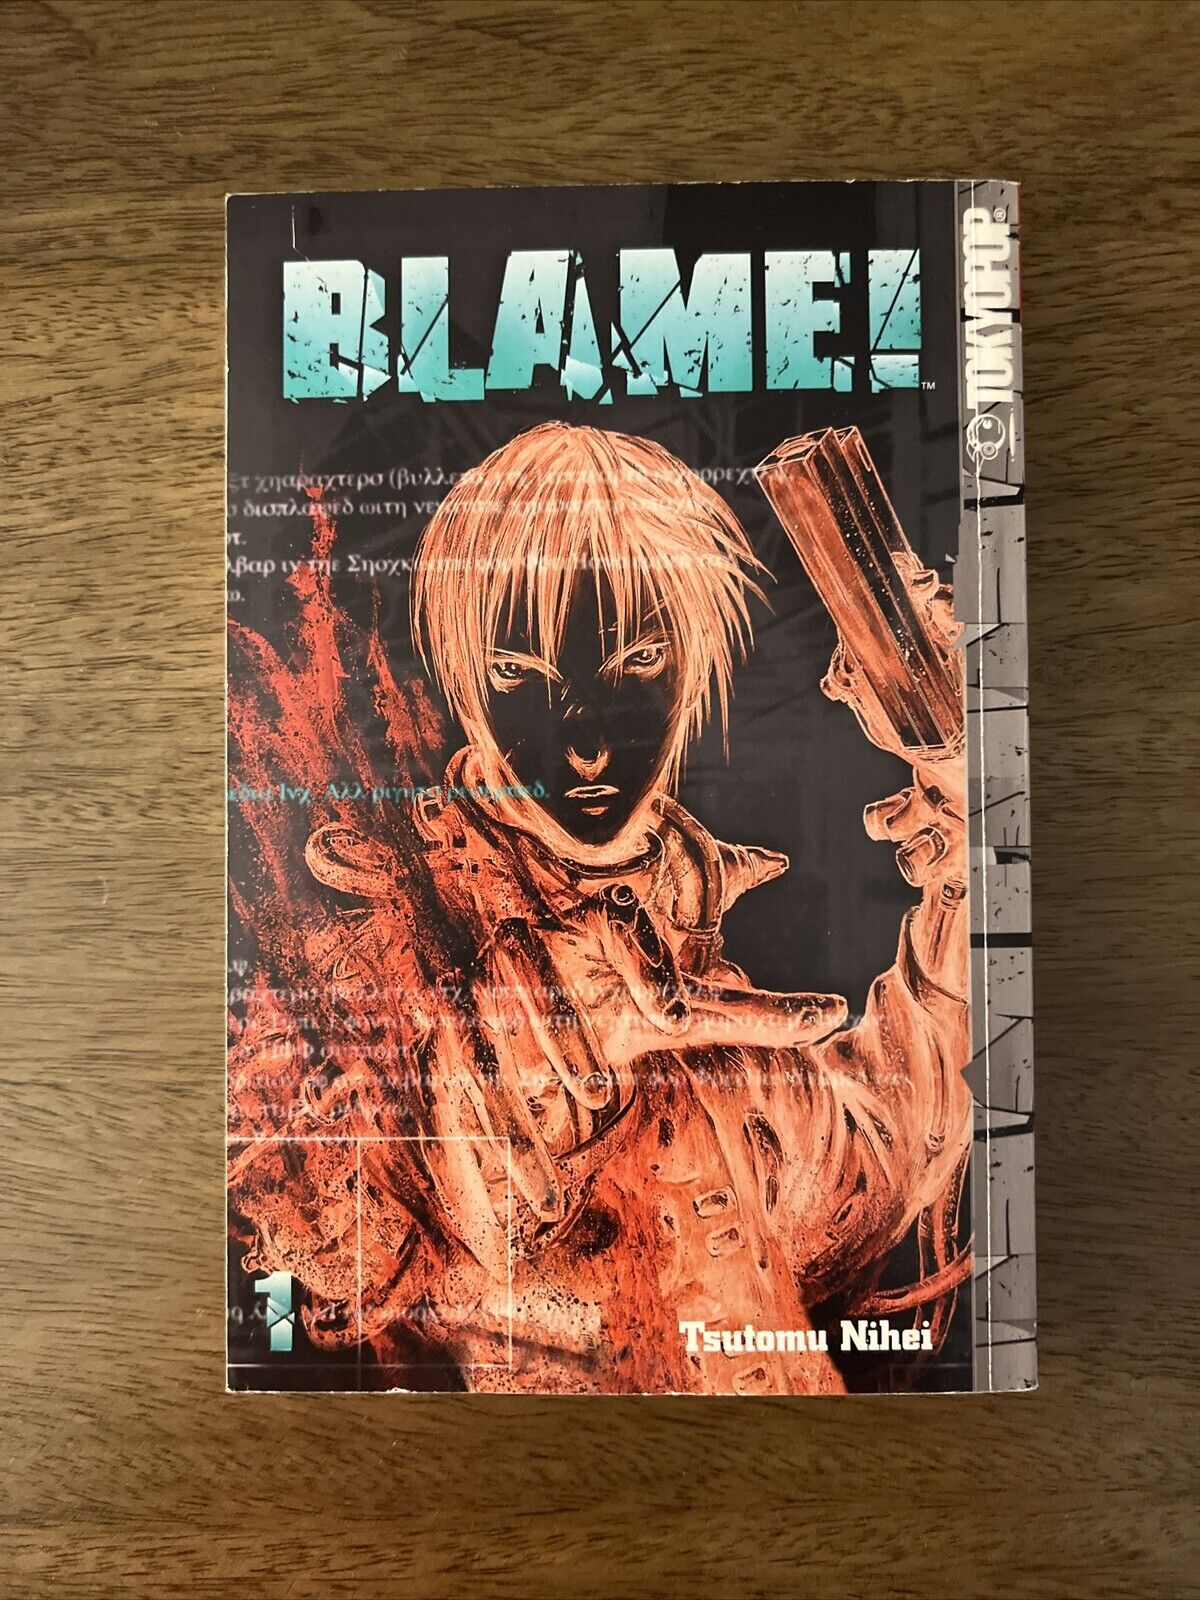 BLAME Vol 1 by Tsutomu Nihei 2005 Tokyopop English OOP (Pre Owned)